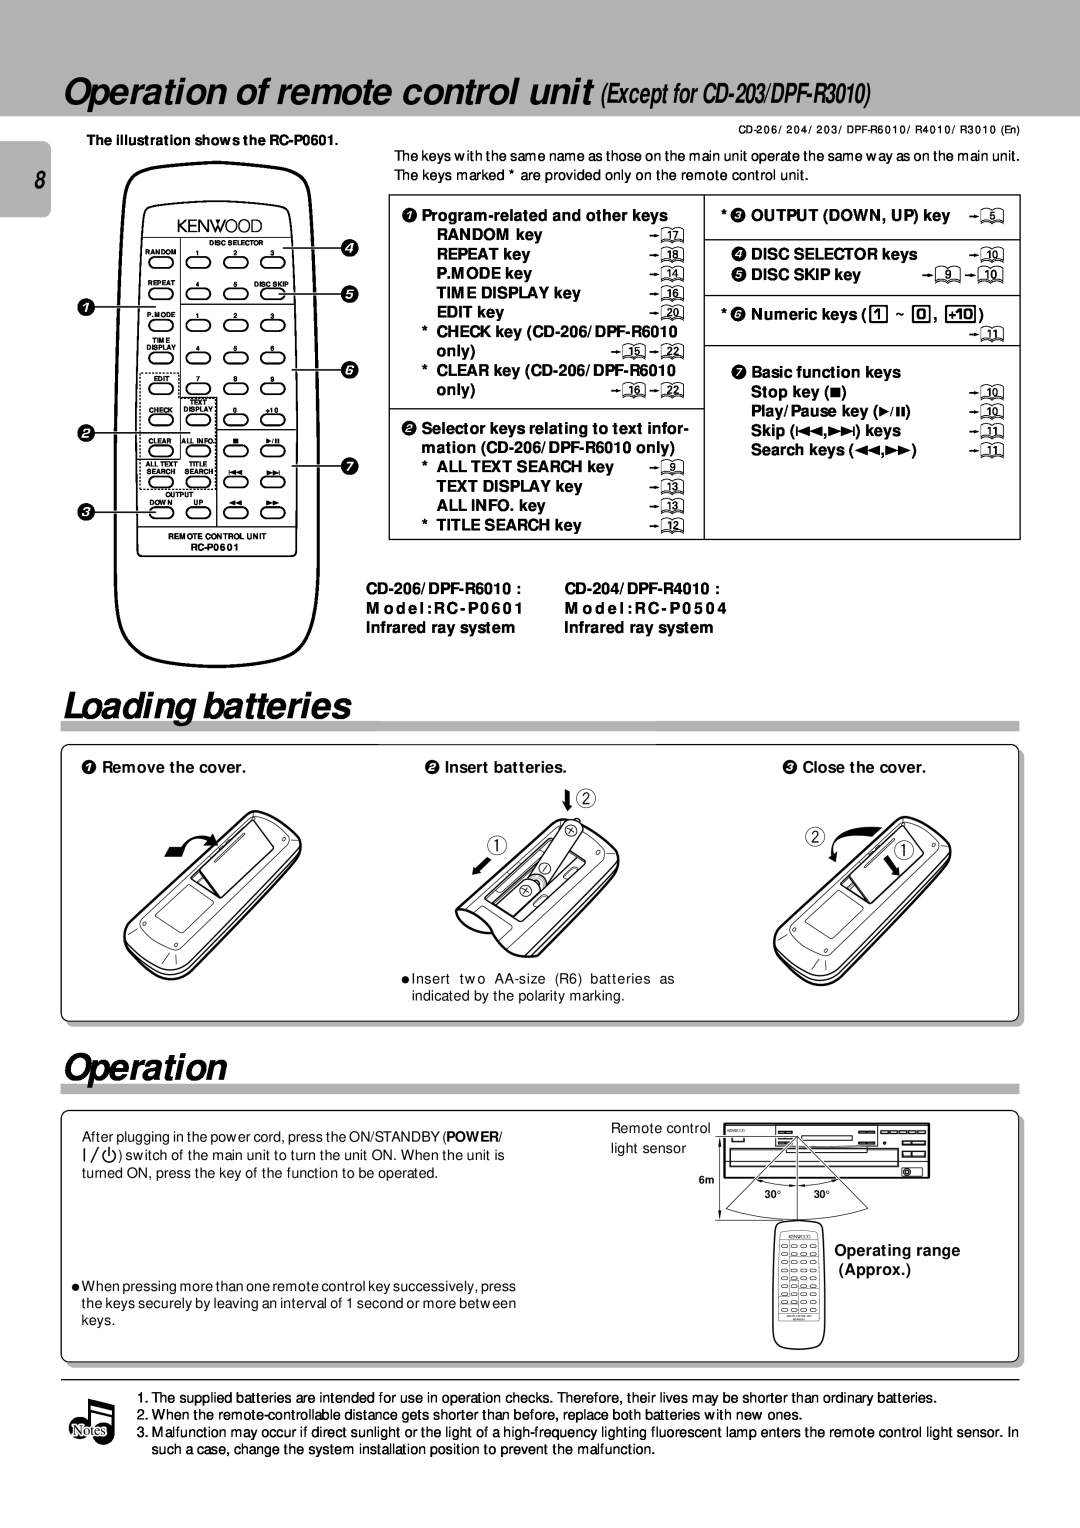 Kenwood DPF-R4010 Loading batteries, Operation, Program-relatedand other keys, OUTPUT DOWN, UP key, RANDOM key, P.MODE key 